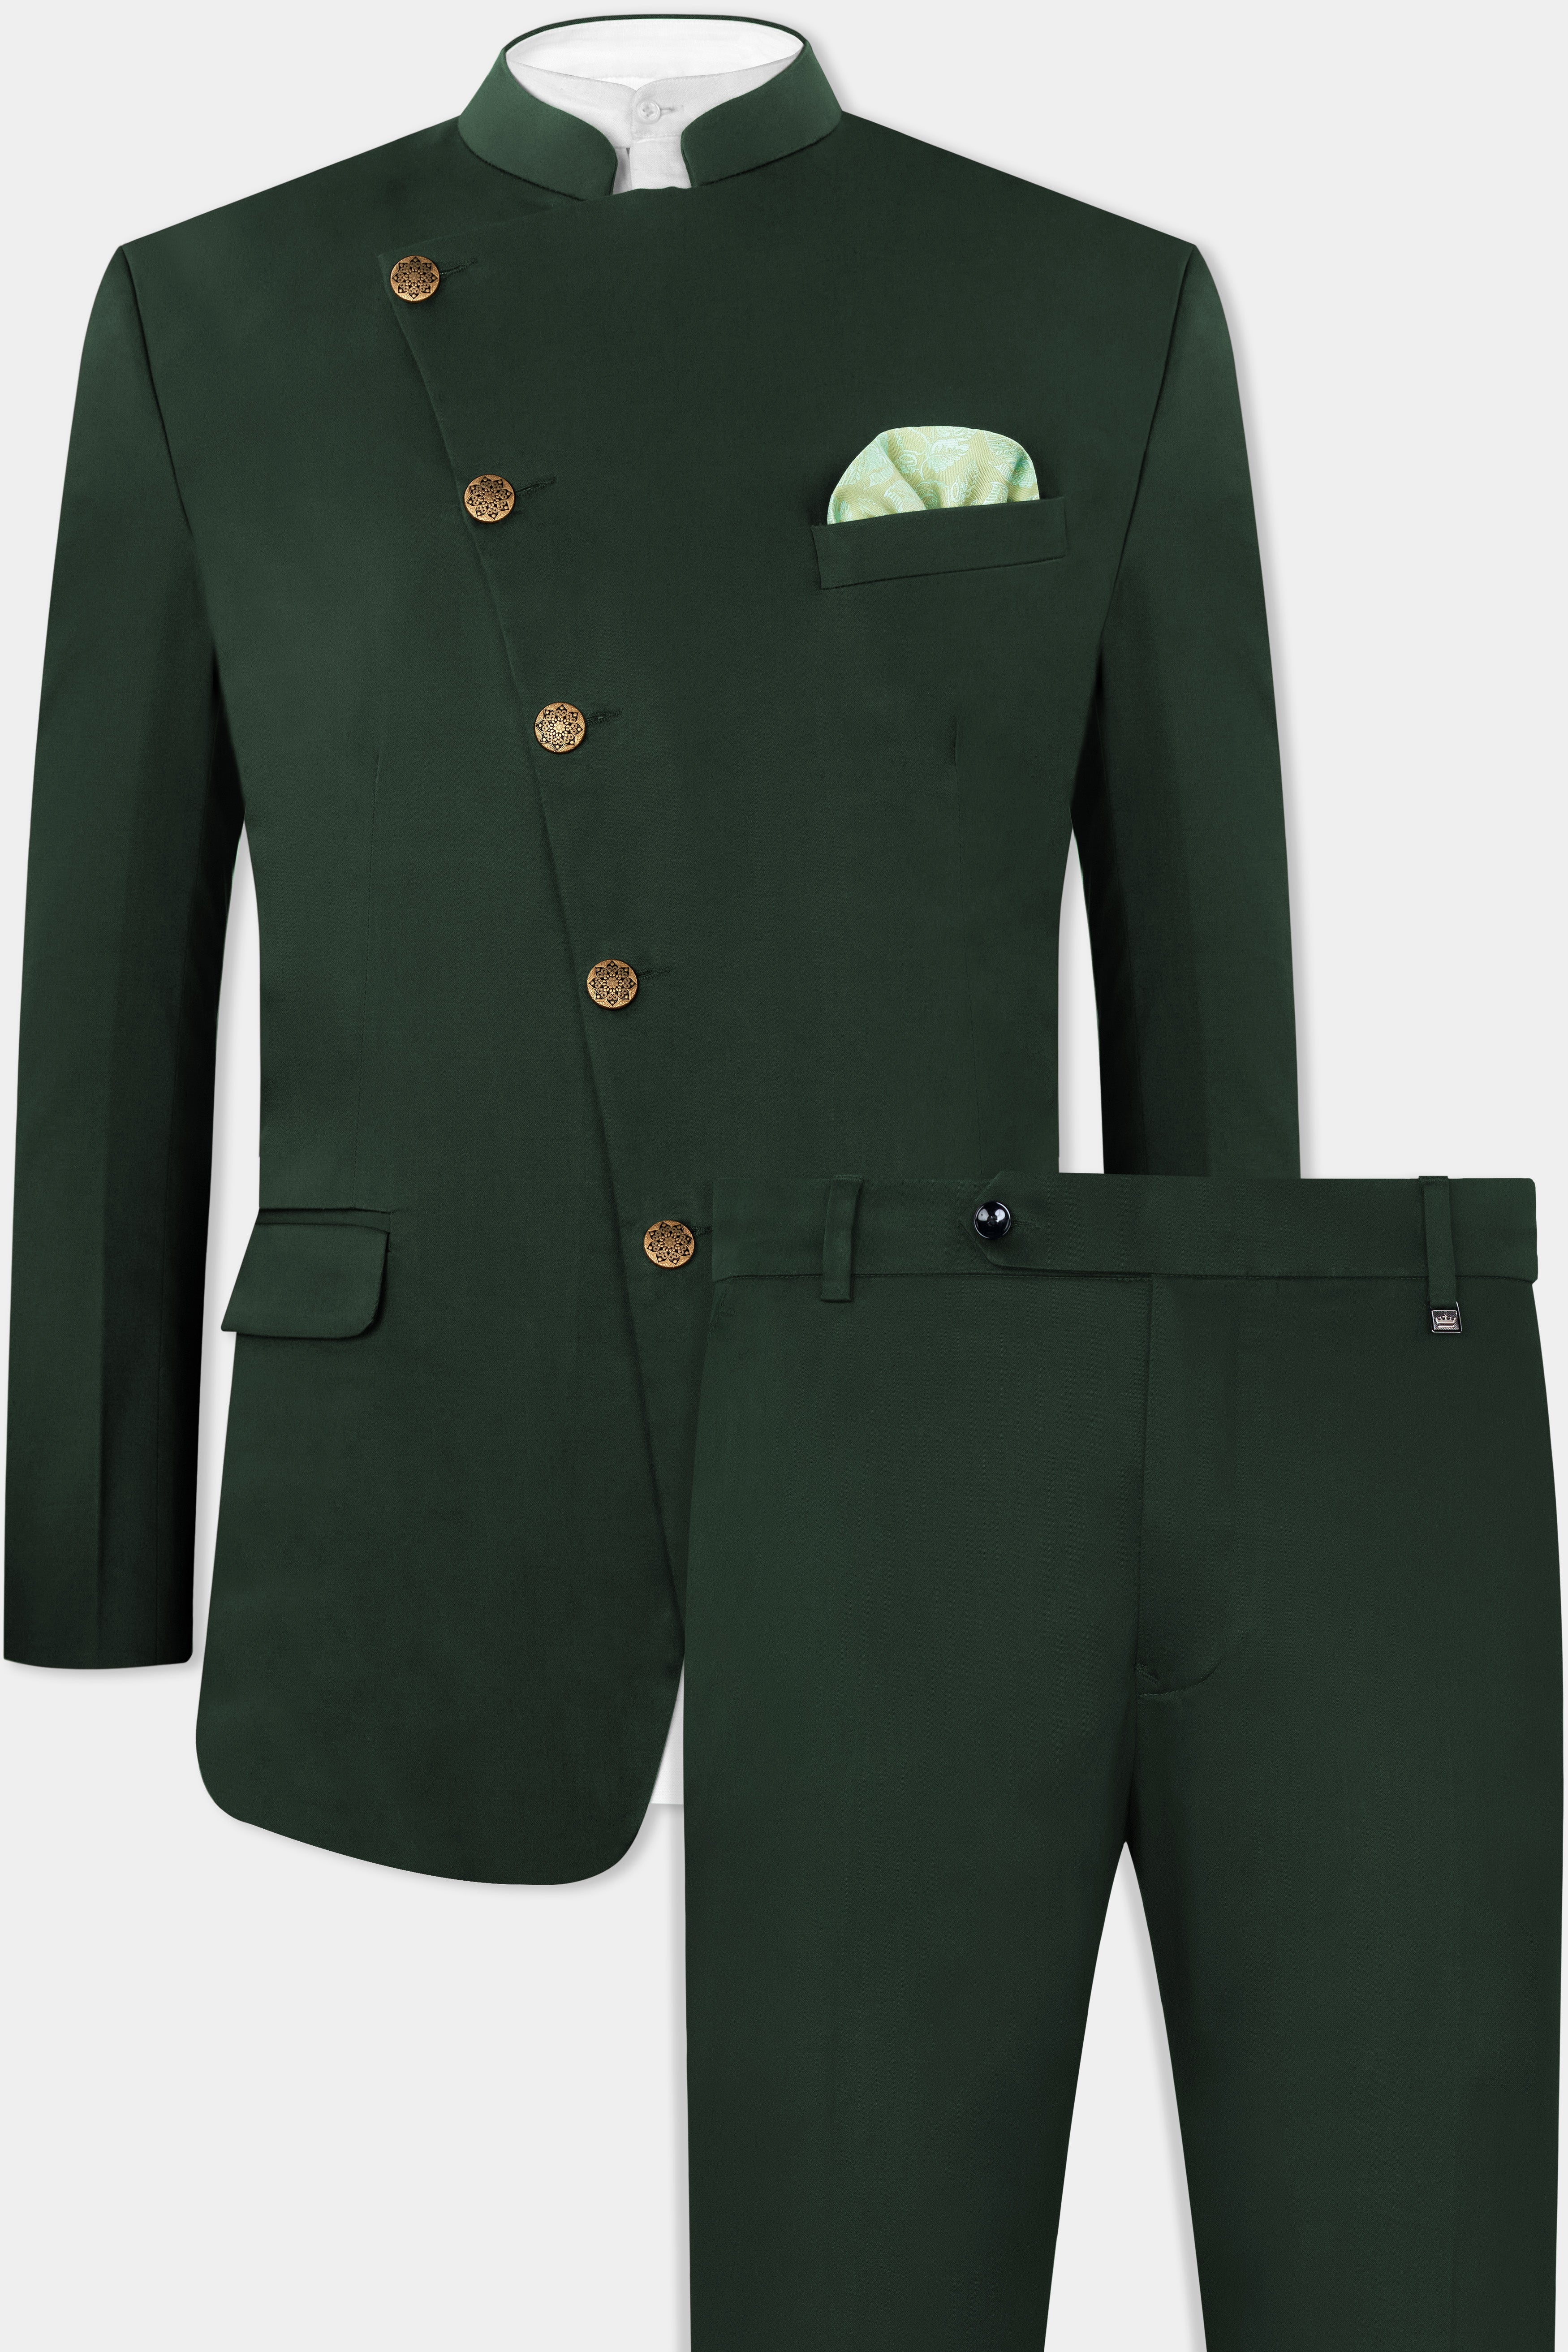 Heavy Metal Green Premium Cotton Cross Buttoned Bandhgala Stretchable traveler Suit ST2777-CBG-36, ST2777-CBG-38, ST2777-CBG-40, ST2777-CBG-42, ST2777-CBG-44, ST2777-CBG-46, ST2777-CBG-48, ST2777-CBG-50, ST2777-CBG-52, ST2777-CBG-54, ST2777-CBG-56, ST2777-CBG-58, ST2777-CBG-60